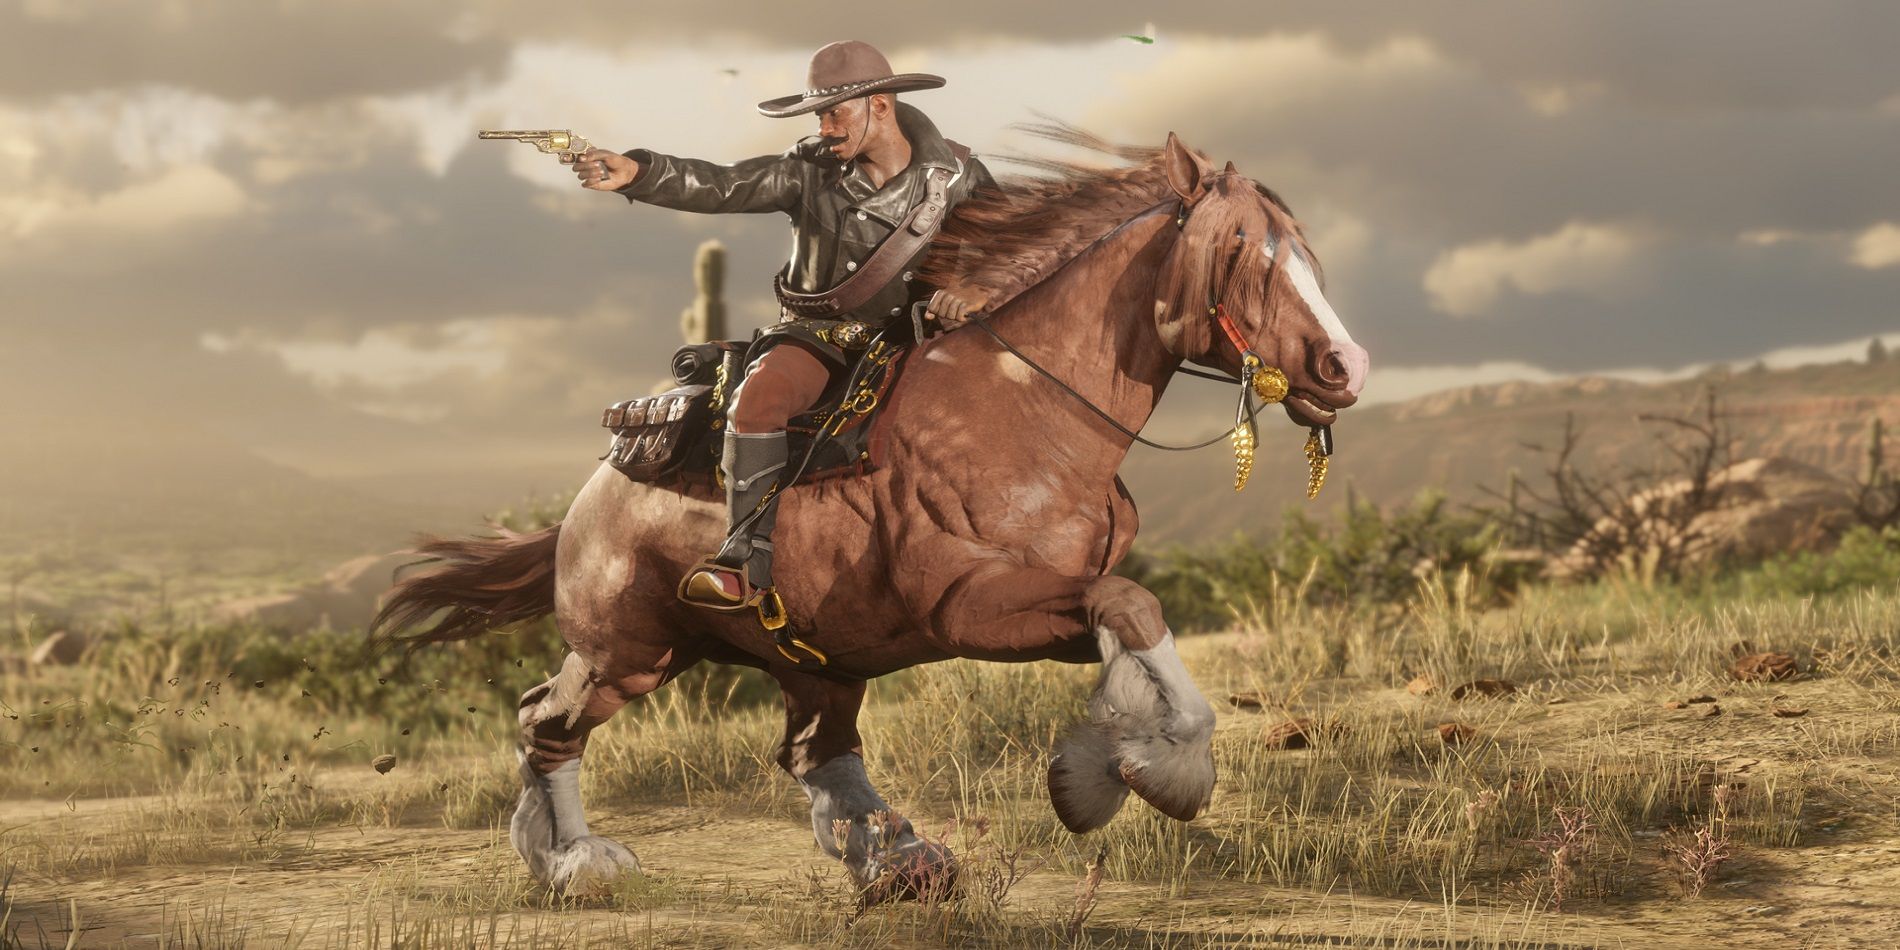 RDO Player Riding Large Brown Horse Shooting Pistol Behind Him